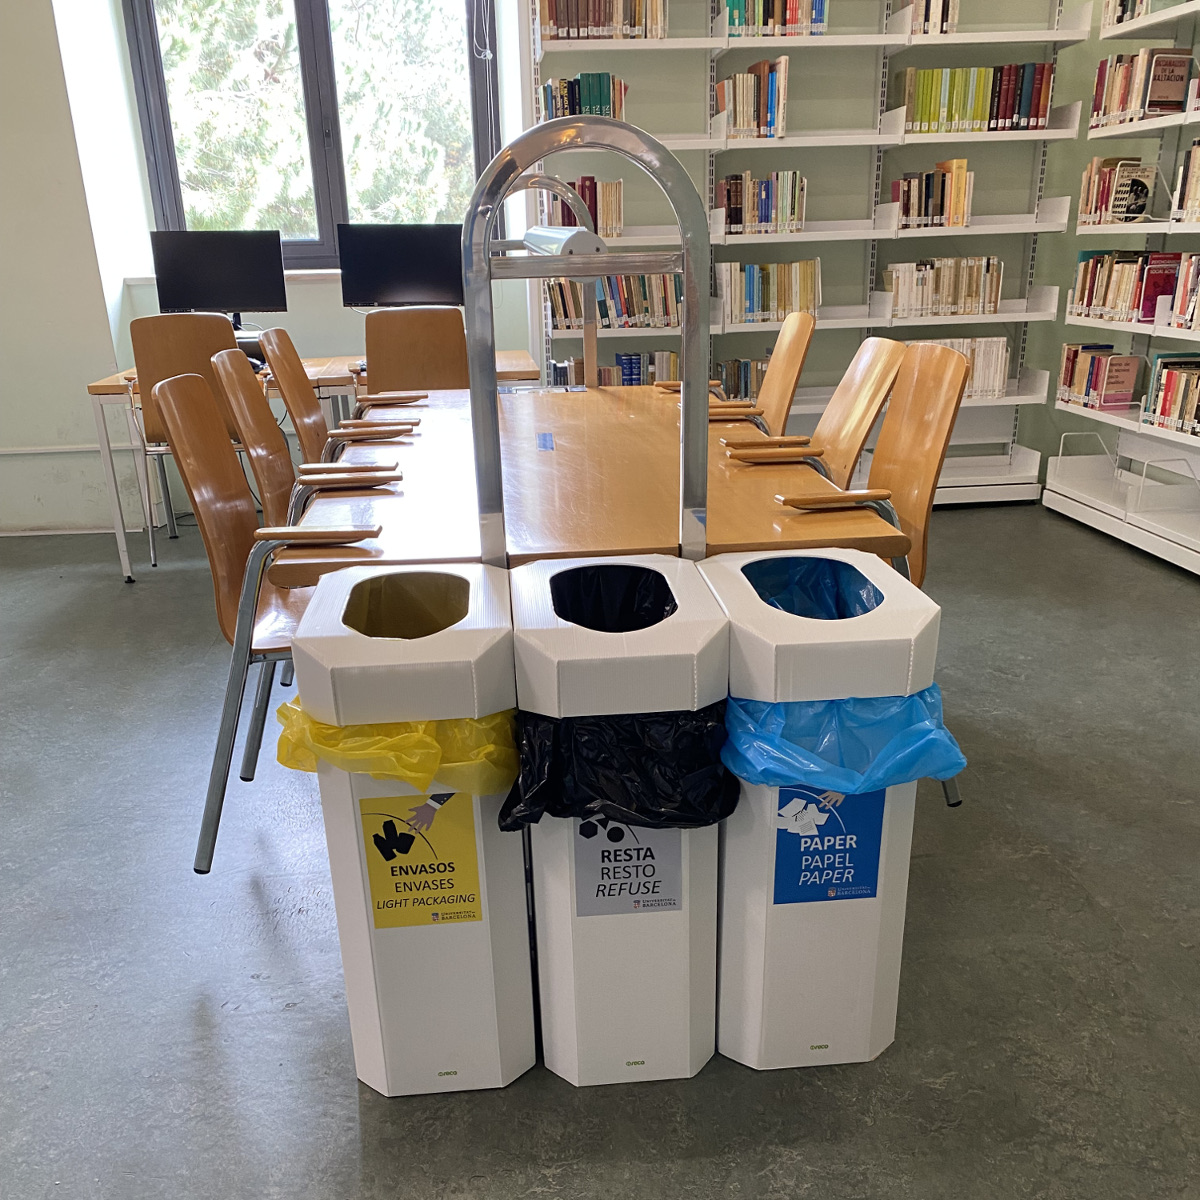 Punt de recollida selectiva de residus al CRAI Biblioteca del Campus Mundet